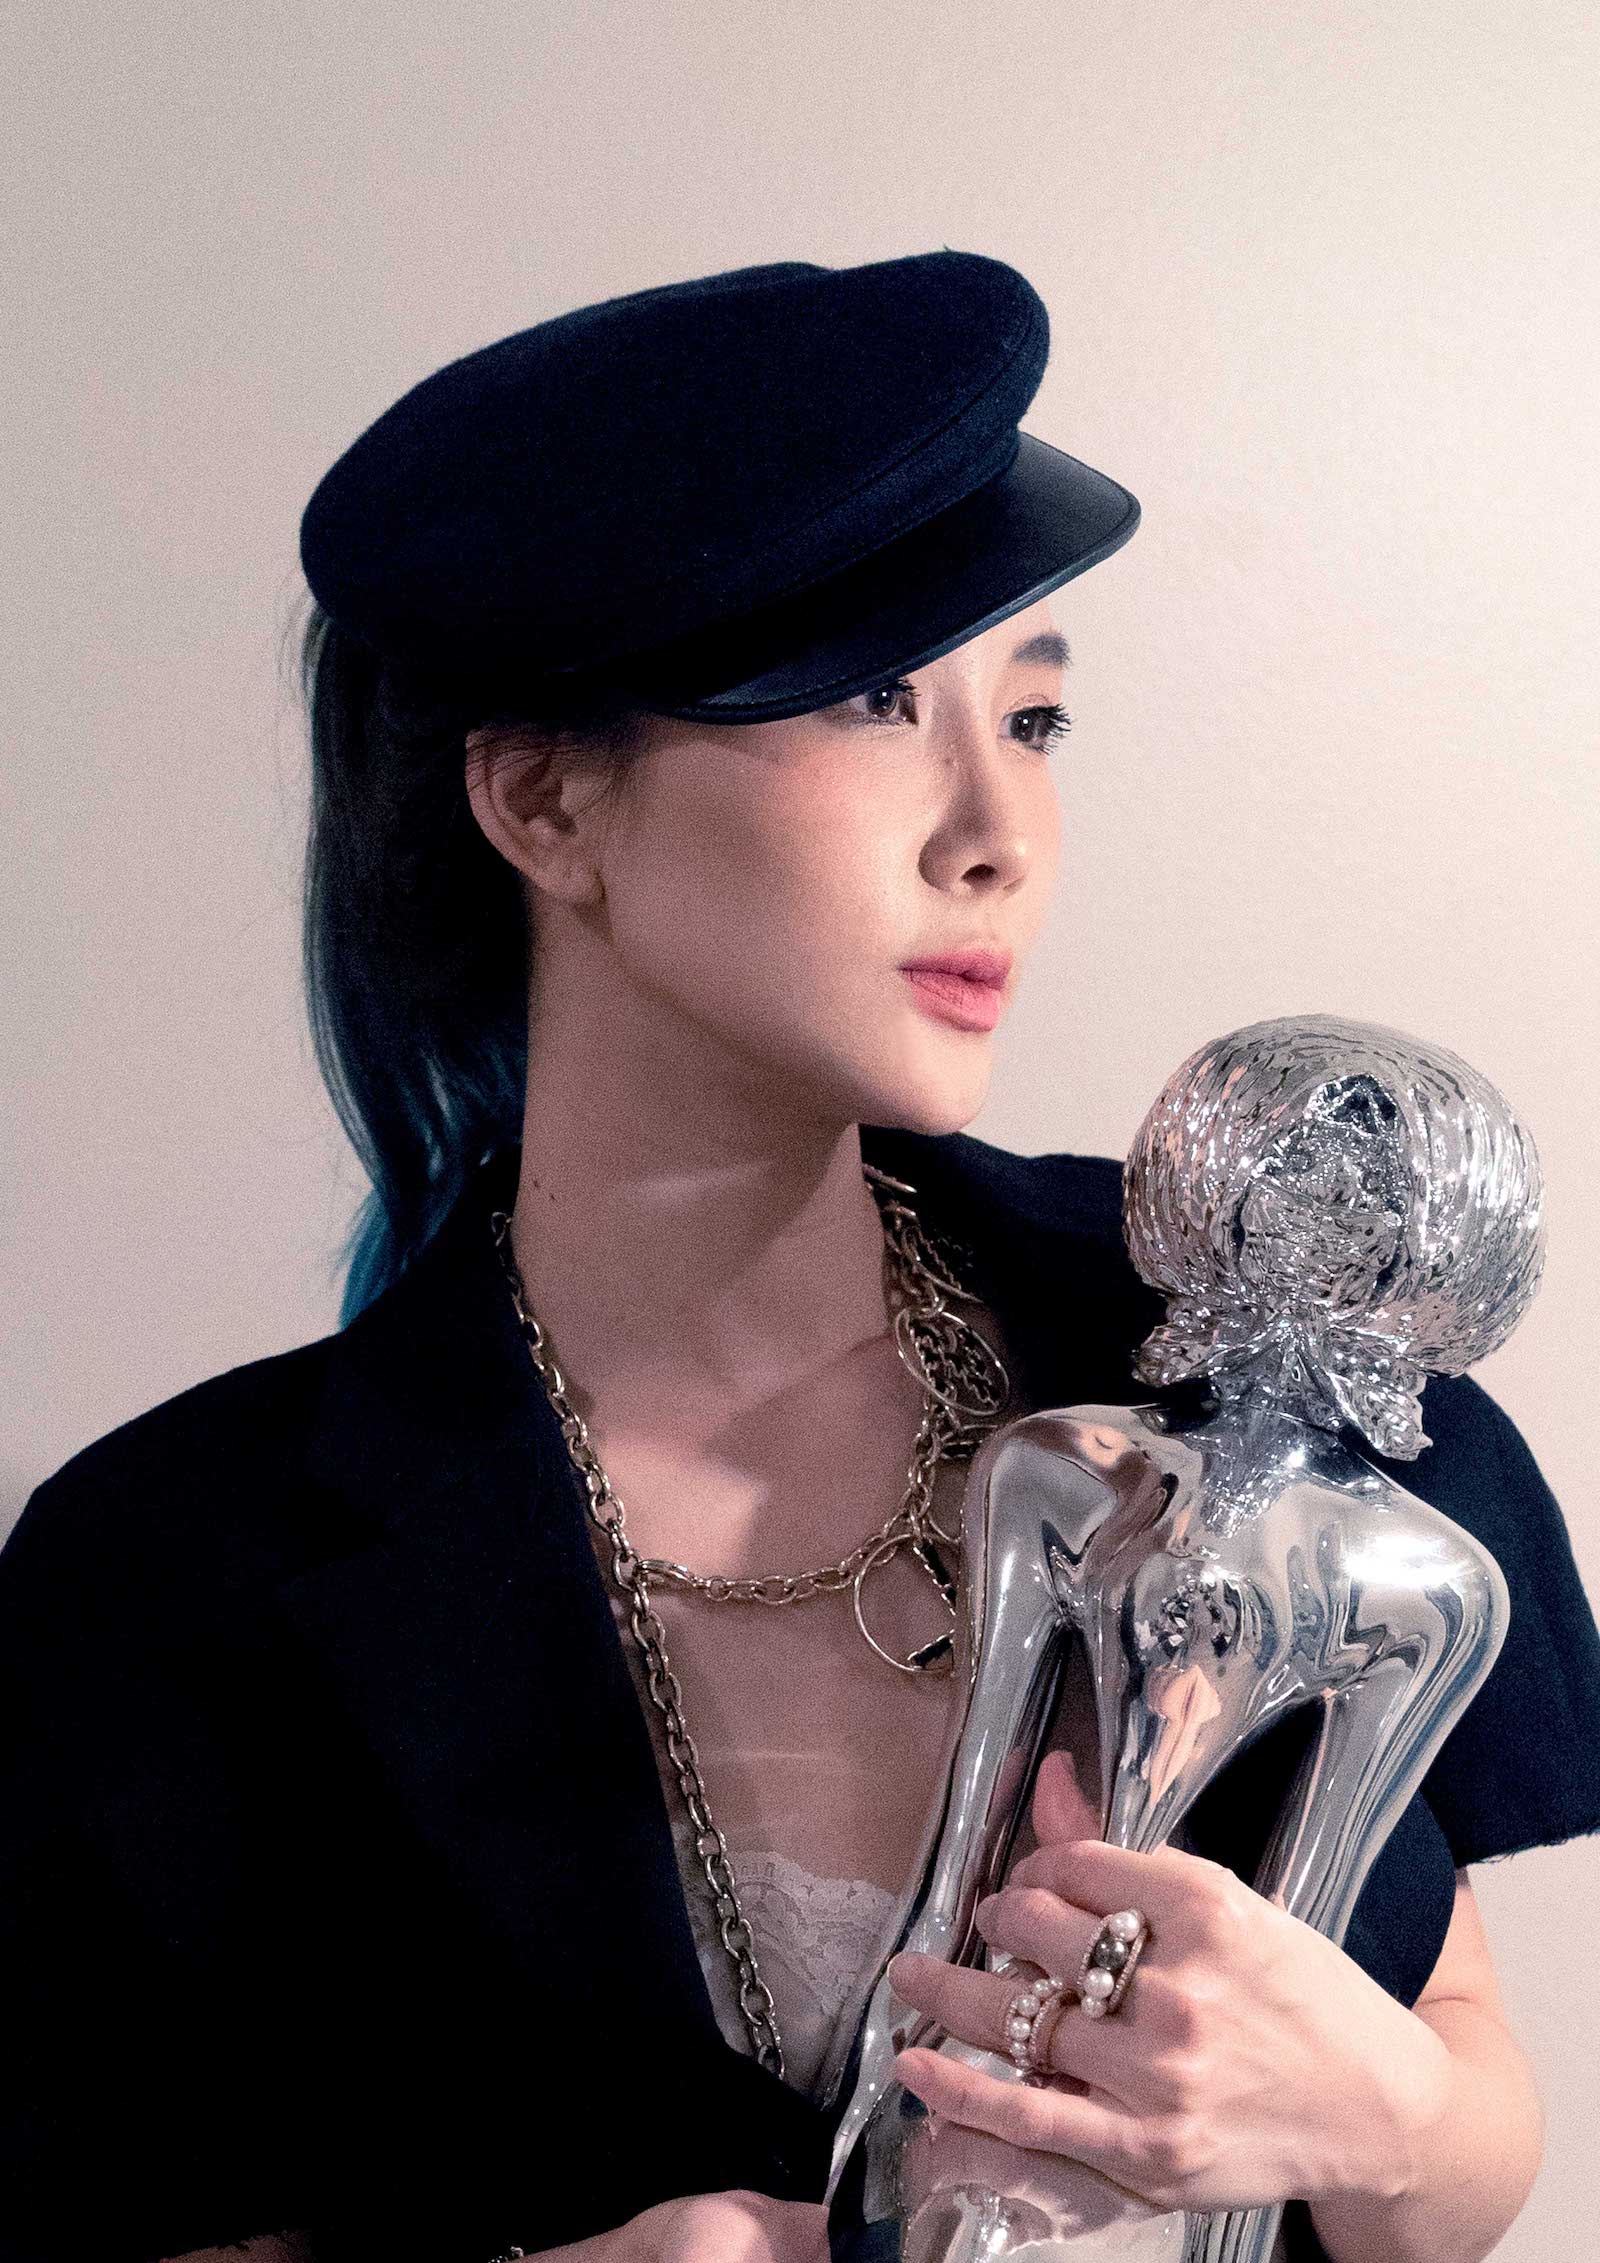 gallerist nalada taechanarong poses with small metal sculpture of skeleton